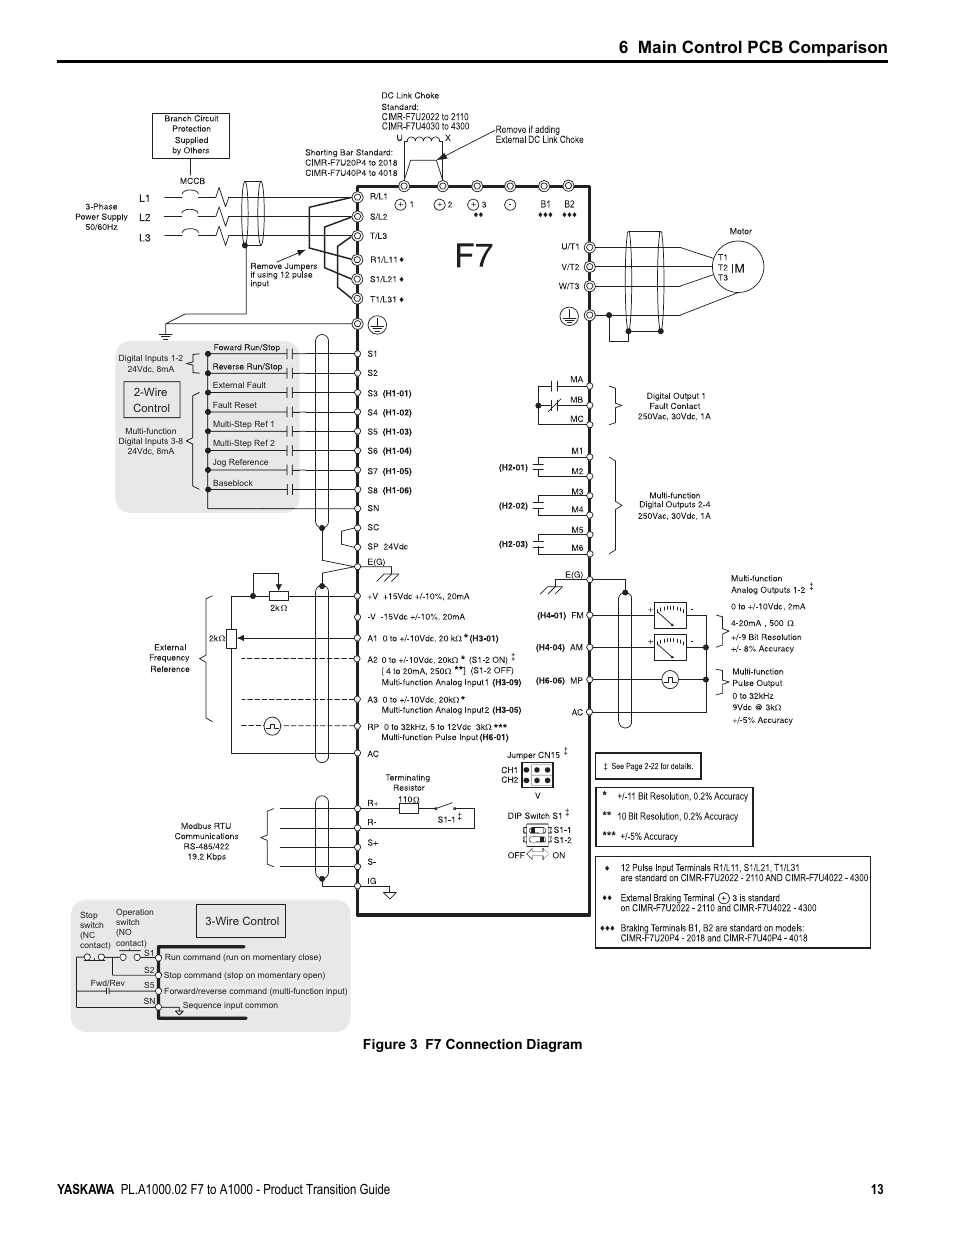 6 Main Control Pcb Comparison  Figure 3 F7 Connection